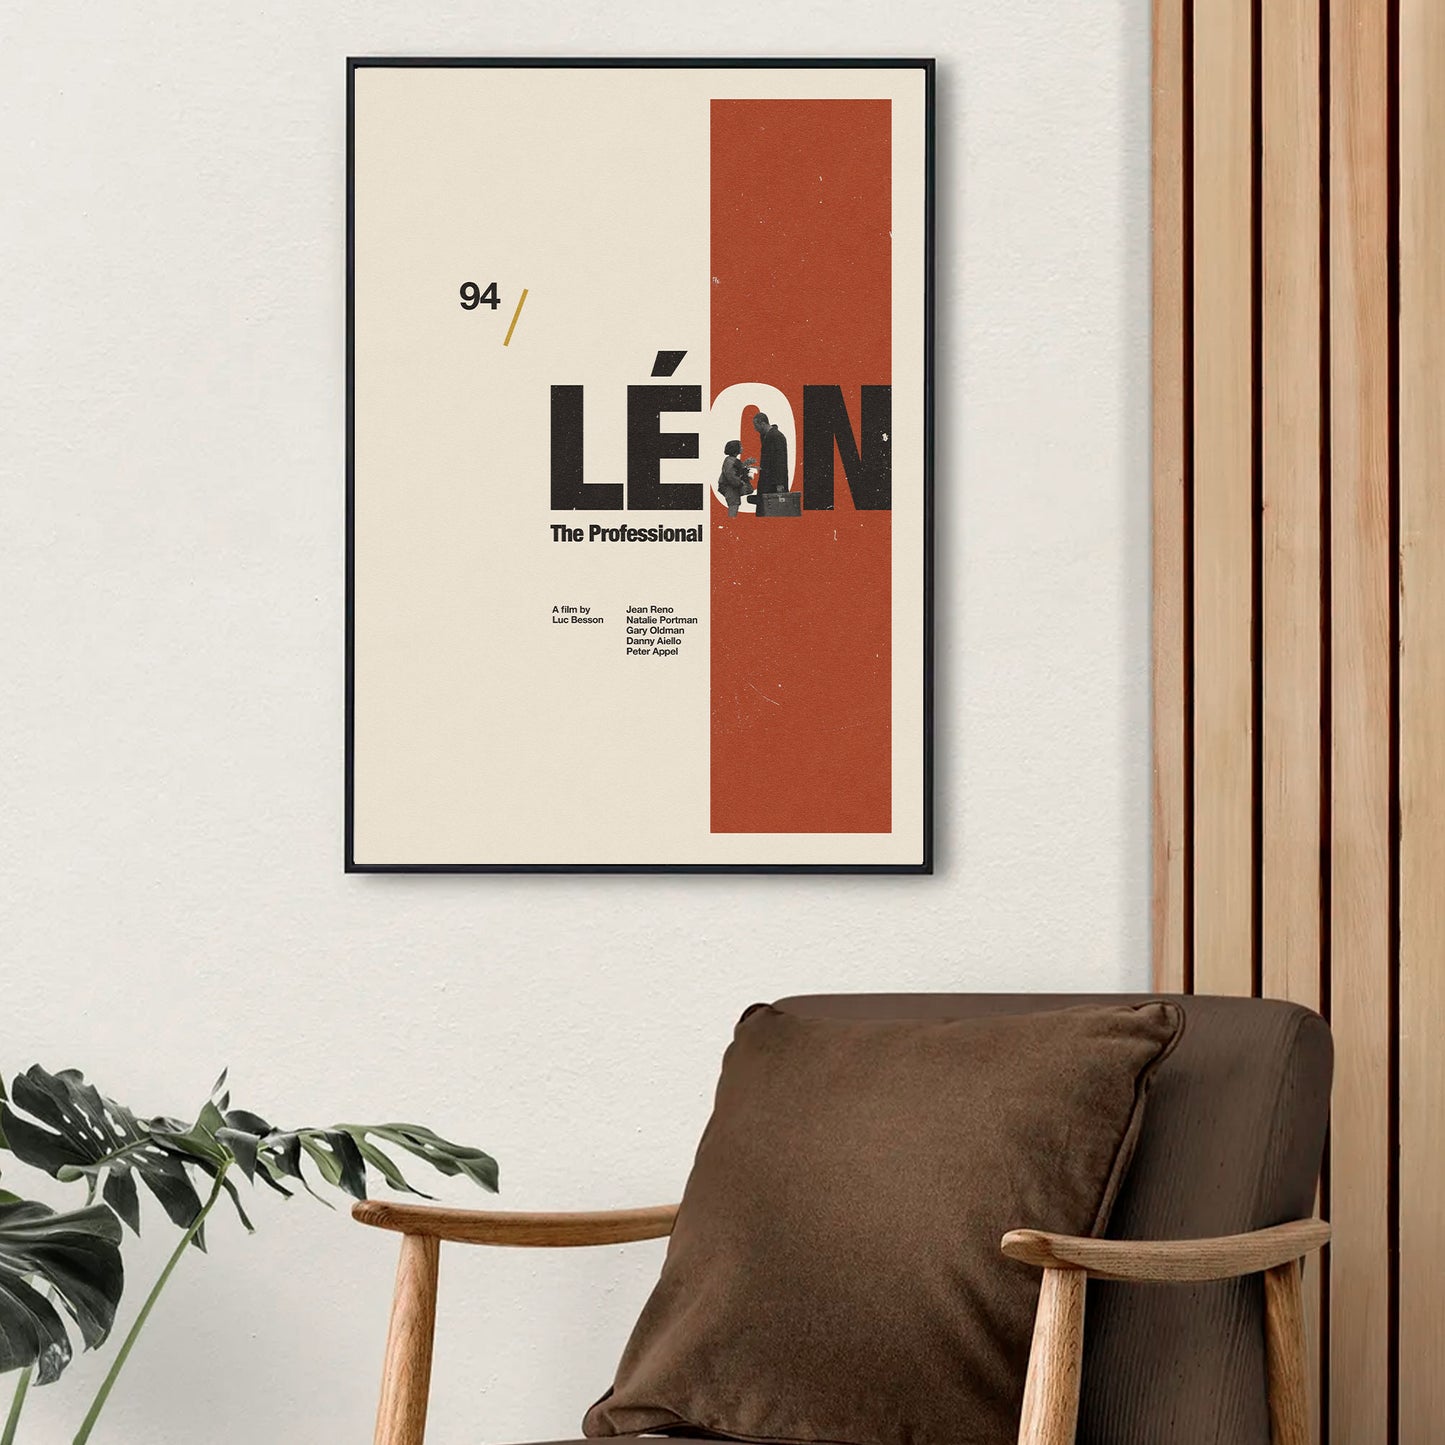 Leon The Professional - Poster - leon, mid century movie, movie poster